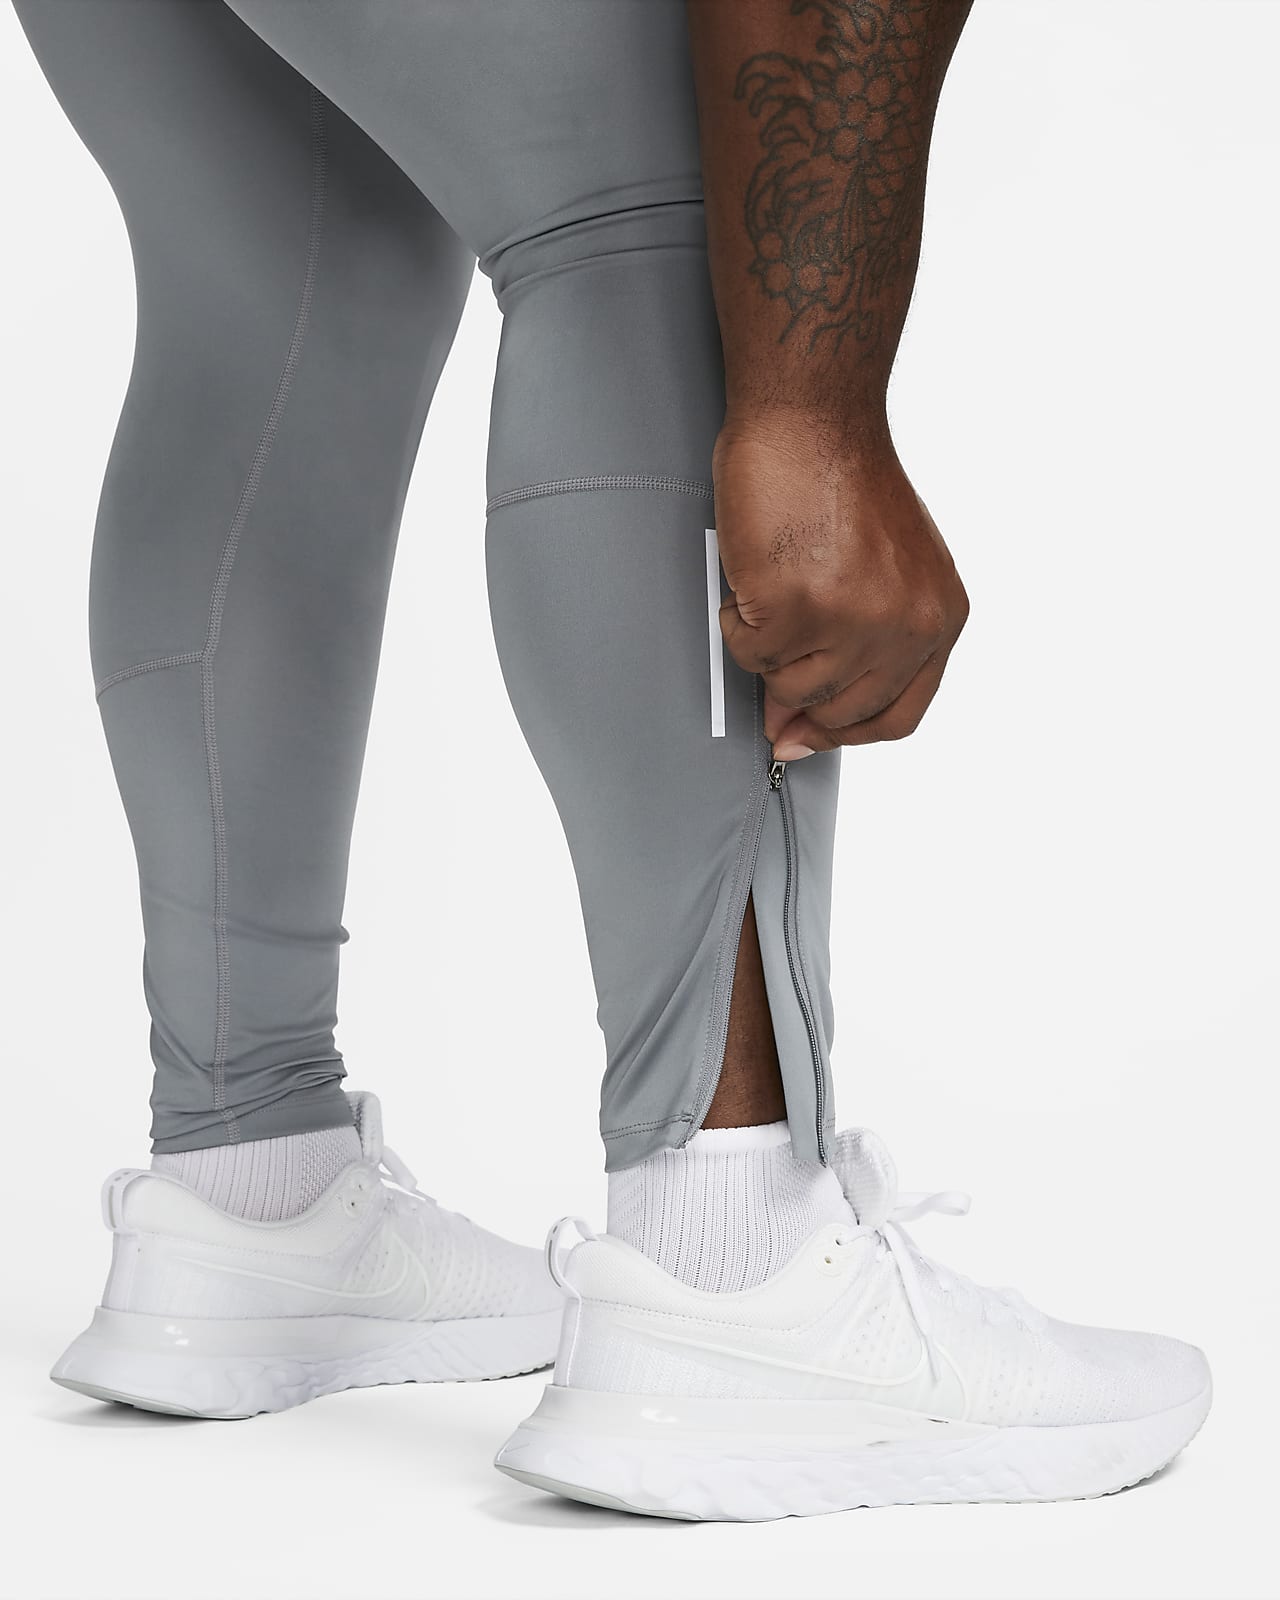 Men's Dri-FIT® Challenger Tight, Nike